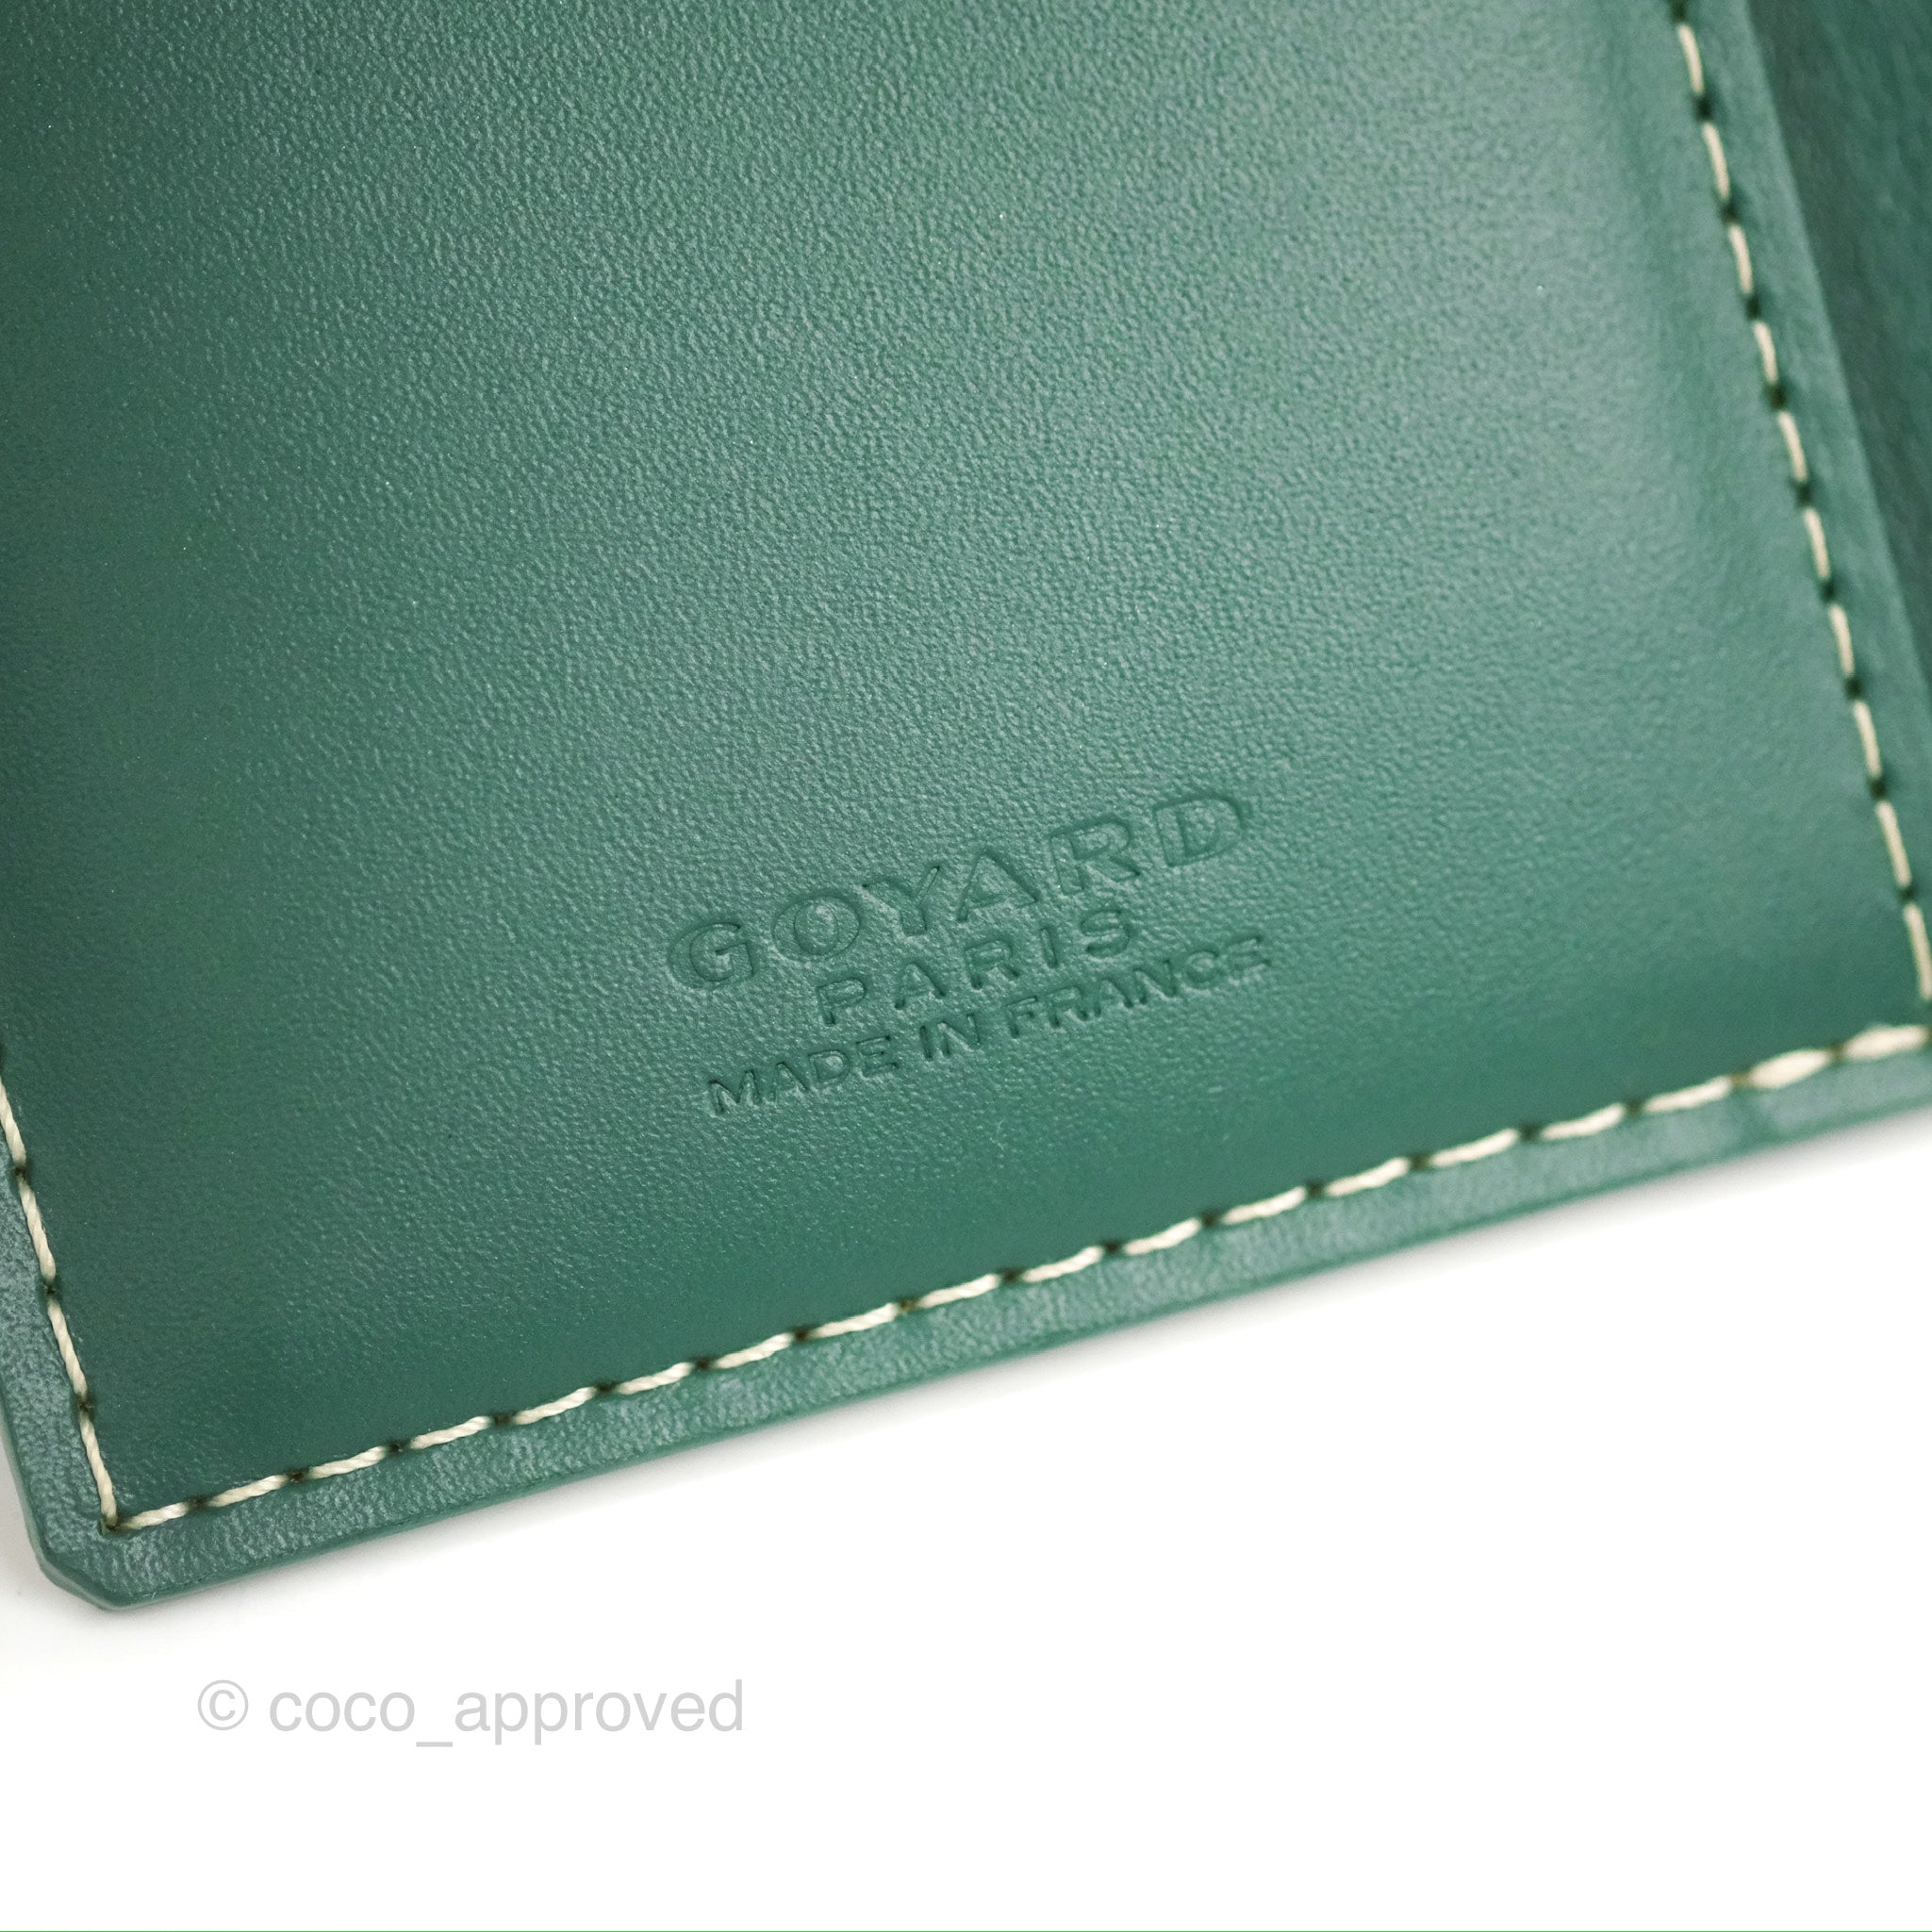 Goyard Saint-Pierre Card Wallet - Shop Now - Goyard World